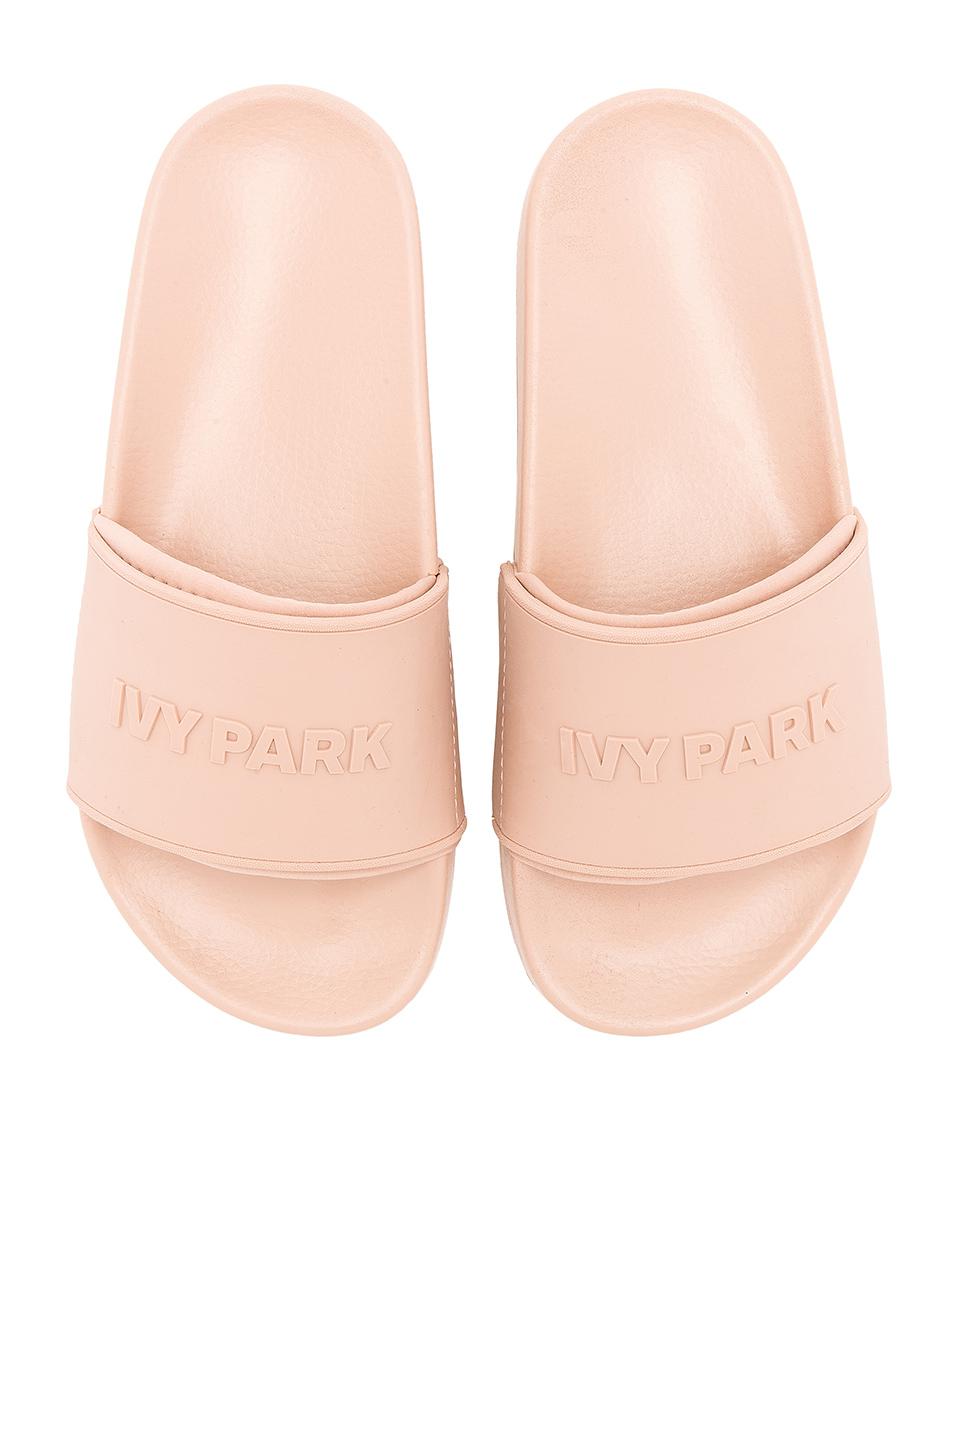 Ivy Park Logo Slides in Dusty Pink (Pink) - Lyst